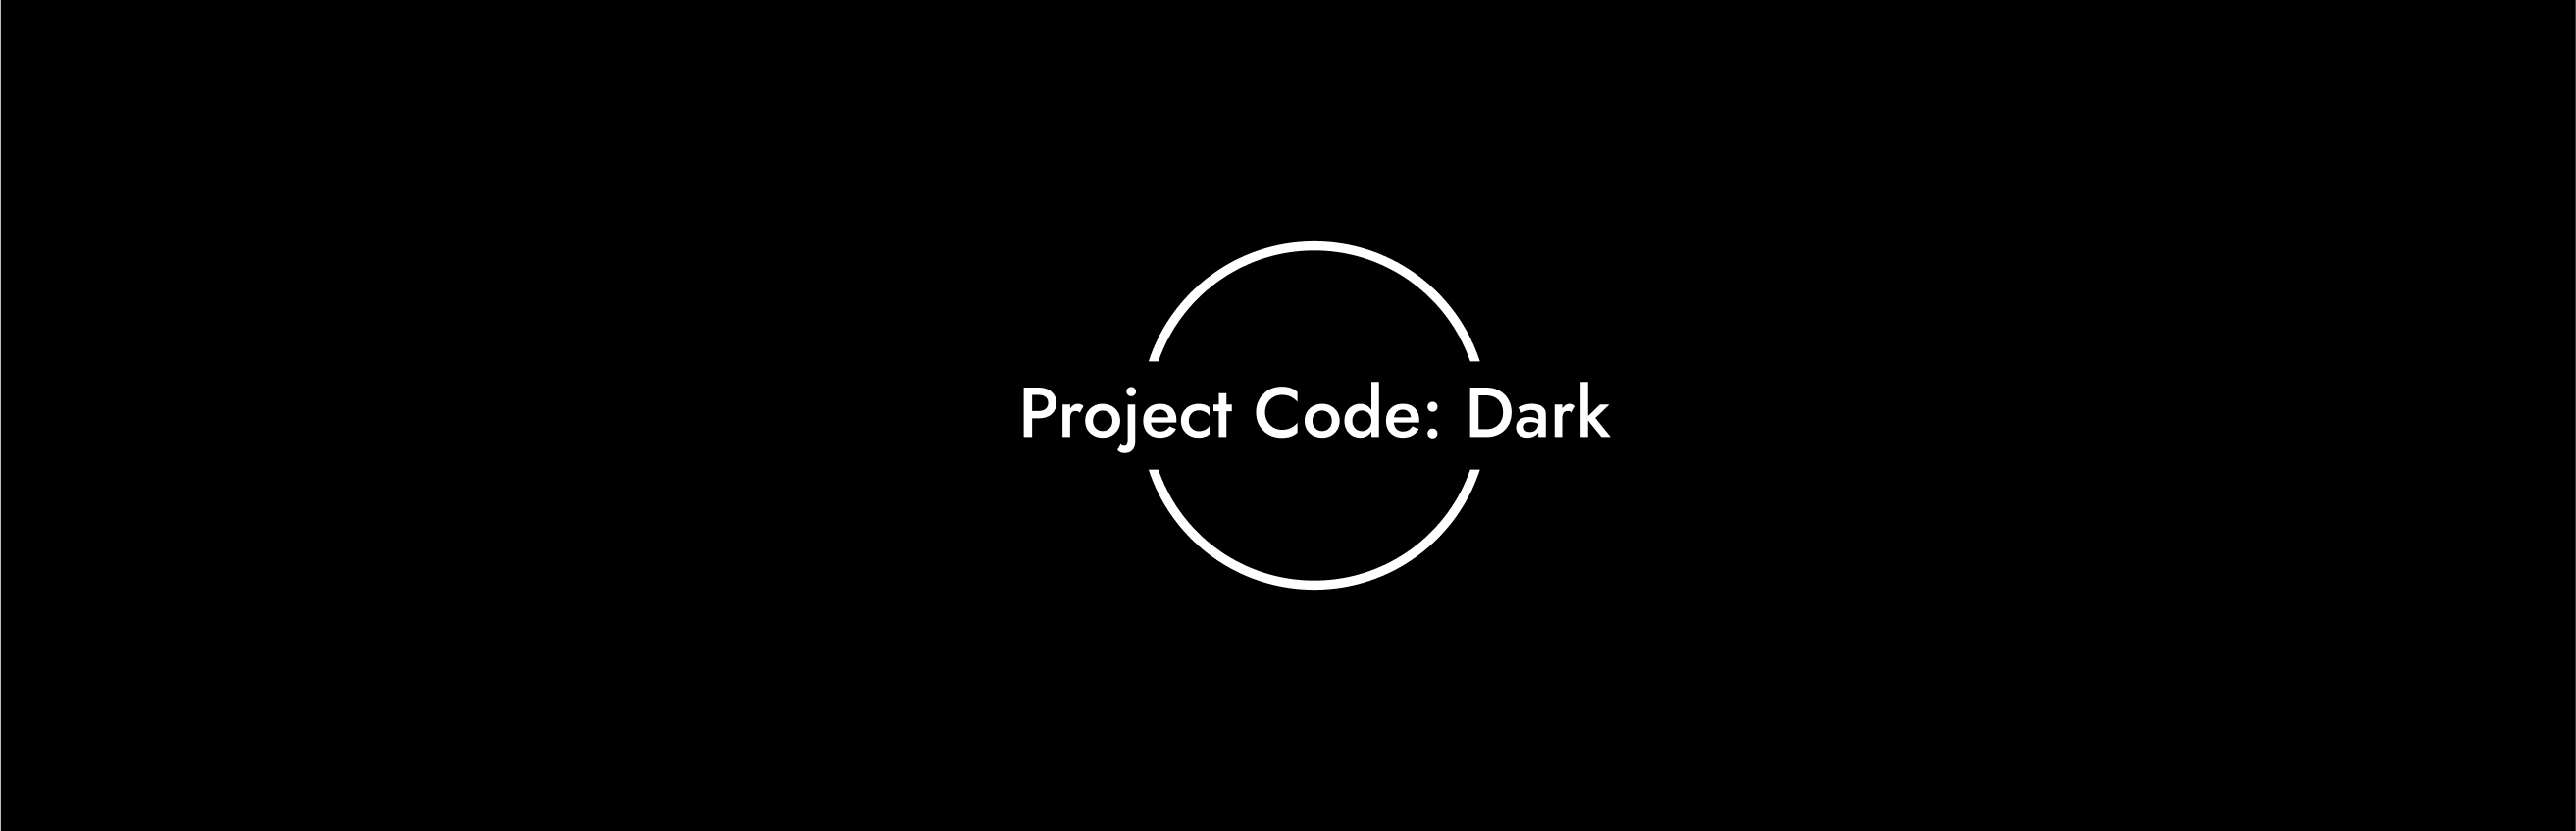 Project Code: Dark (Demo)